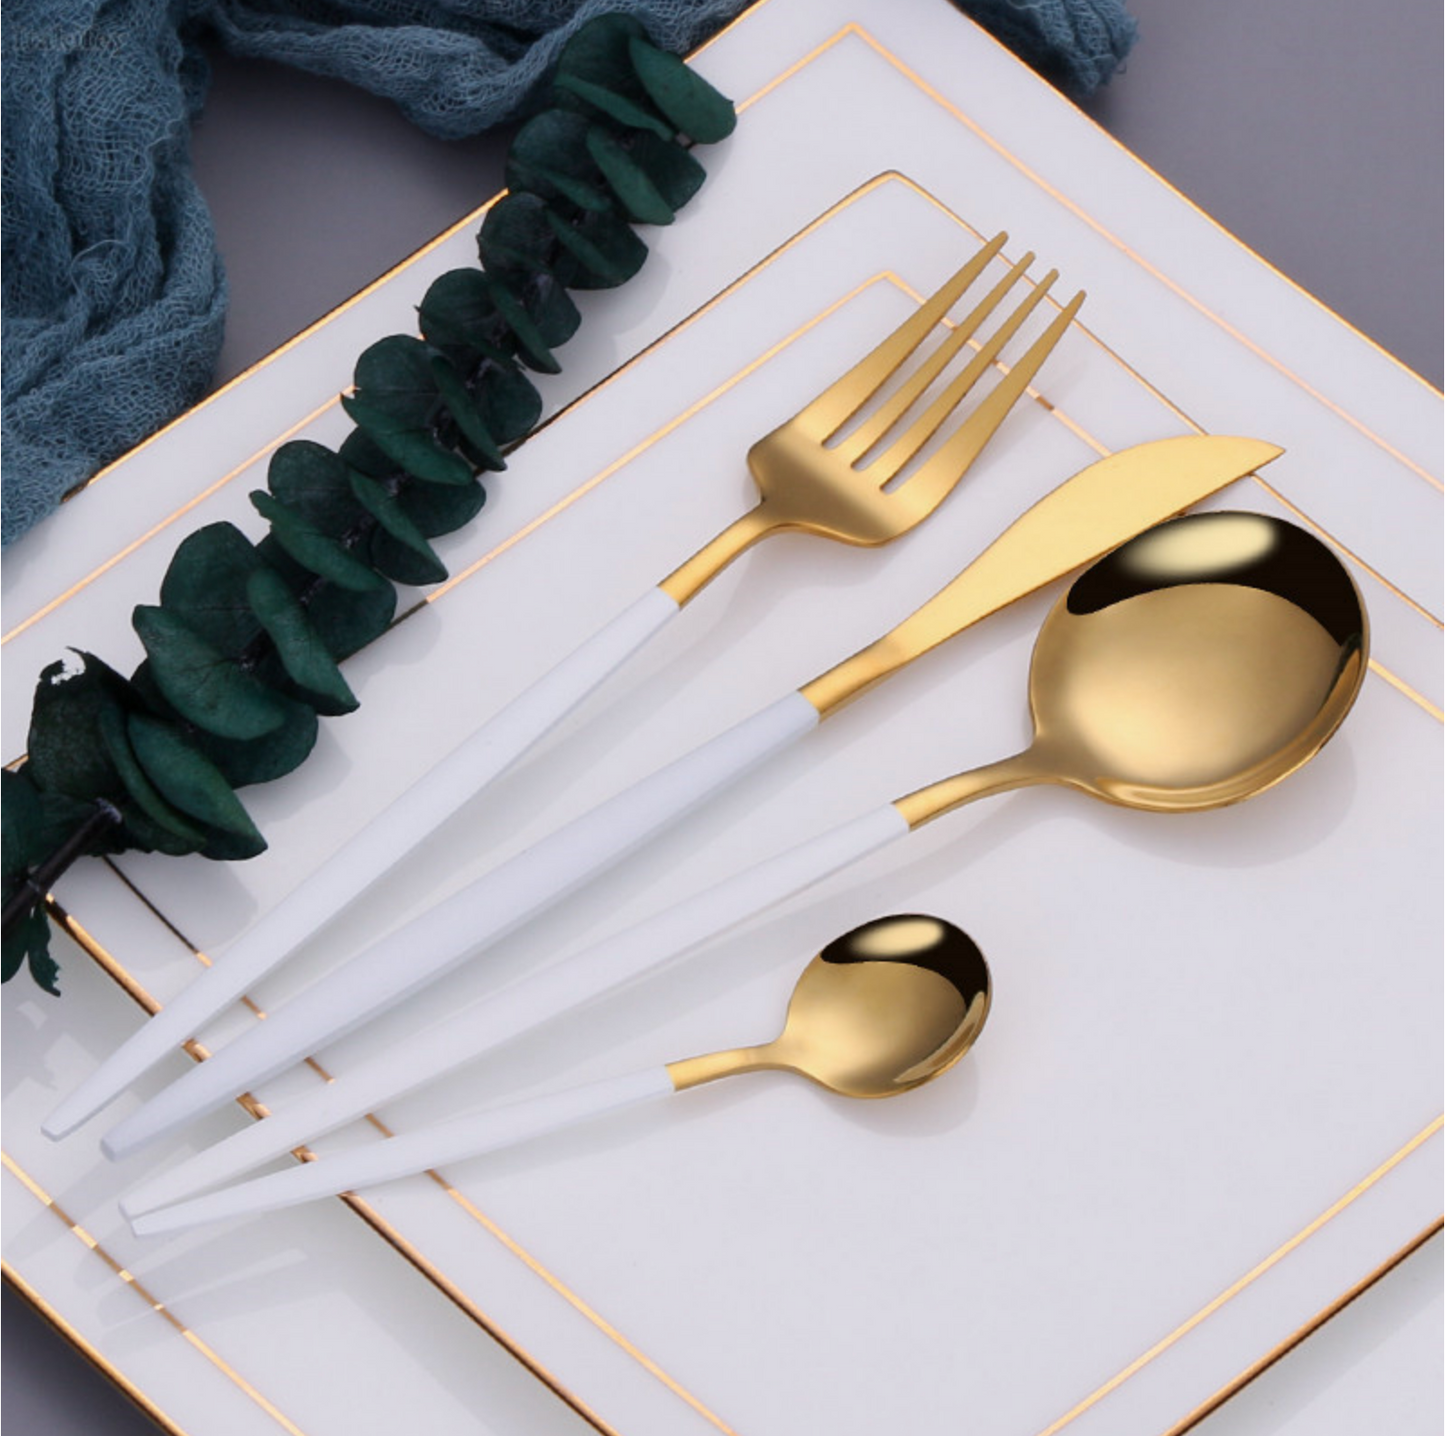 Luxus White & Gold Spigel Dinnerware Set - 24PCS